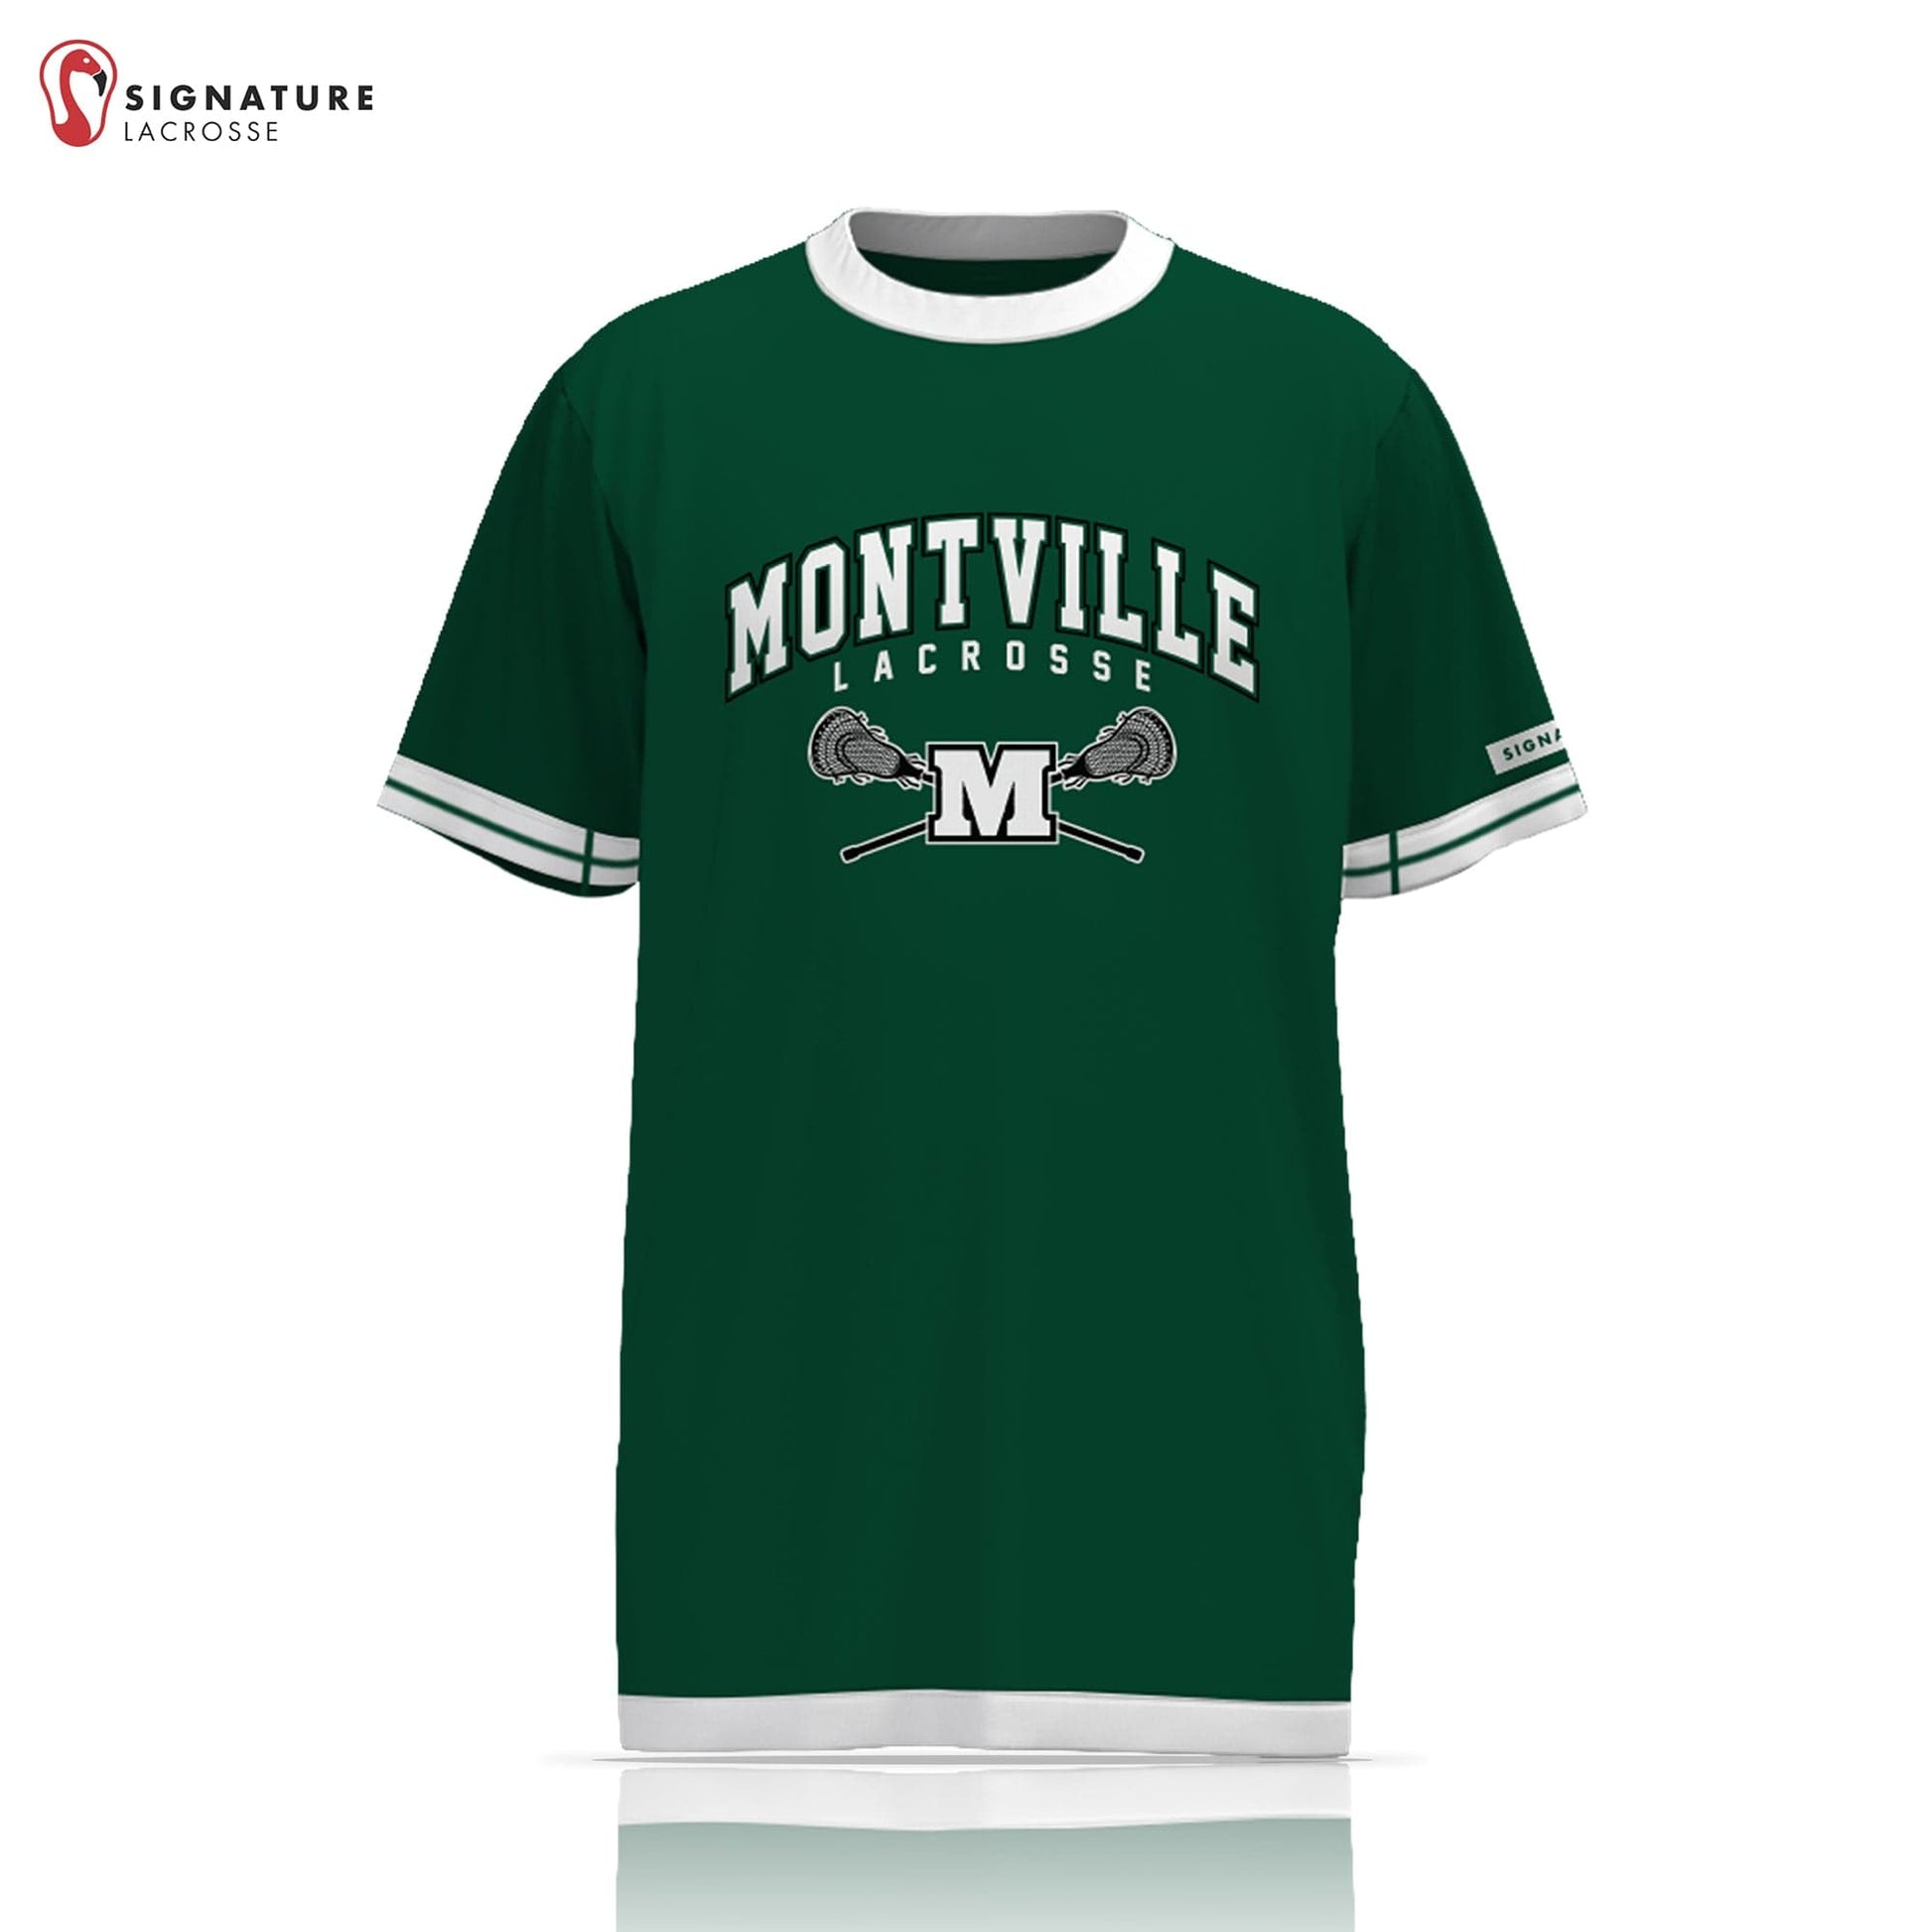 Montville Lacrosse Men's Game Short Sleeve Shooter Shirt Signature Lacrosse